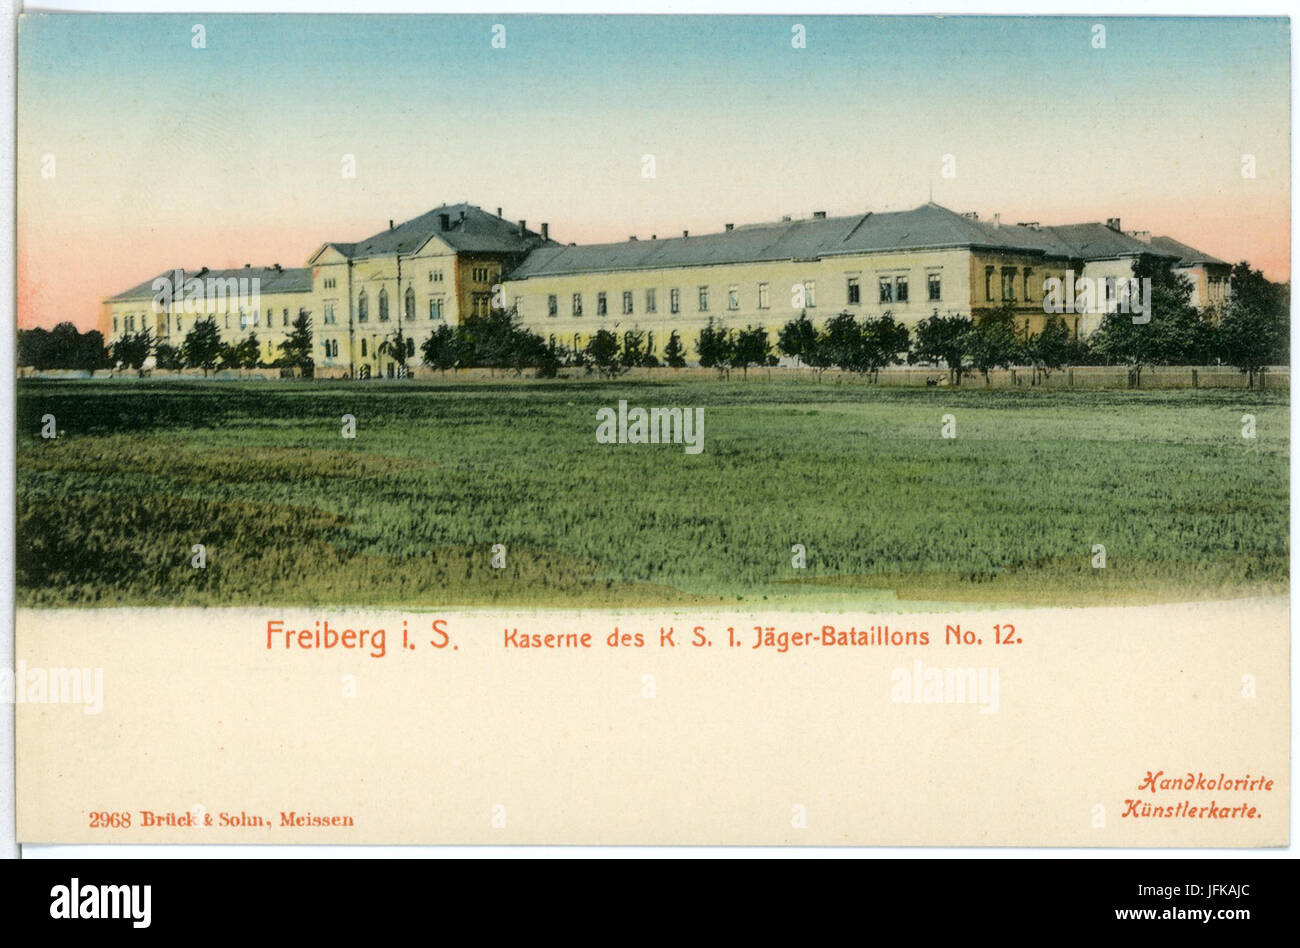 02968-Freiberg-1903-Kaserne des 1. Königlich Sächsischen Jäger-Bataillon Nr. 12-Brück & Sohn Kunstverlag Stock Photo